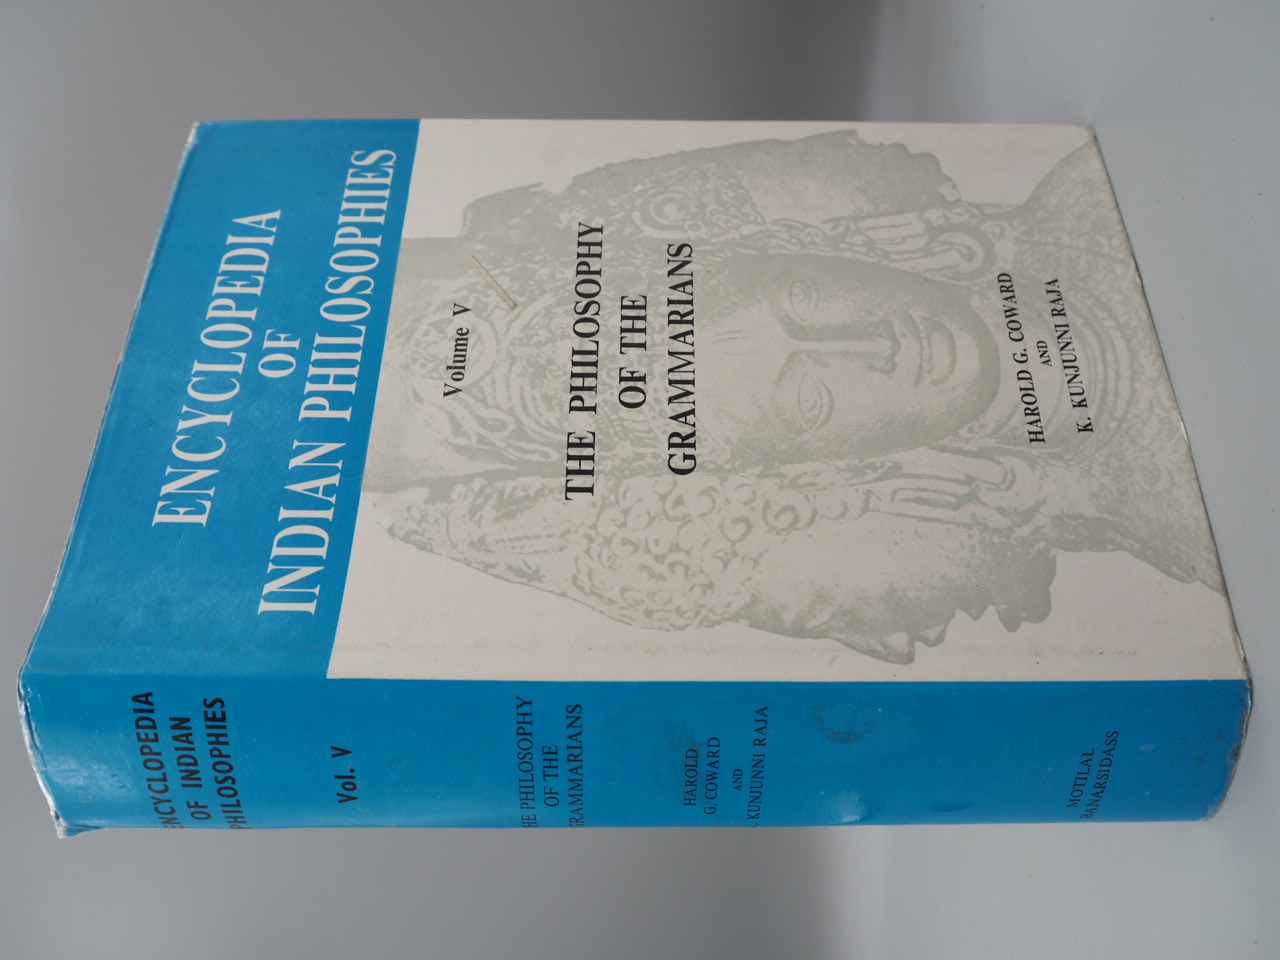 The Philosophy of the Grammarians: Vol. 5 of Encyclopedia of Indian Philosophies. - Harold G. Coward and K. Kunjunni Raja.